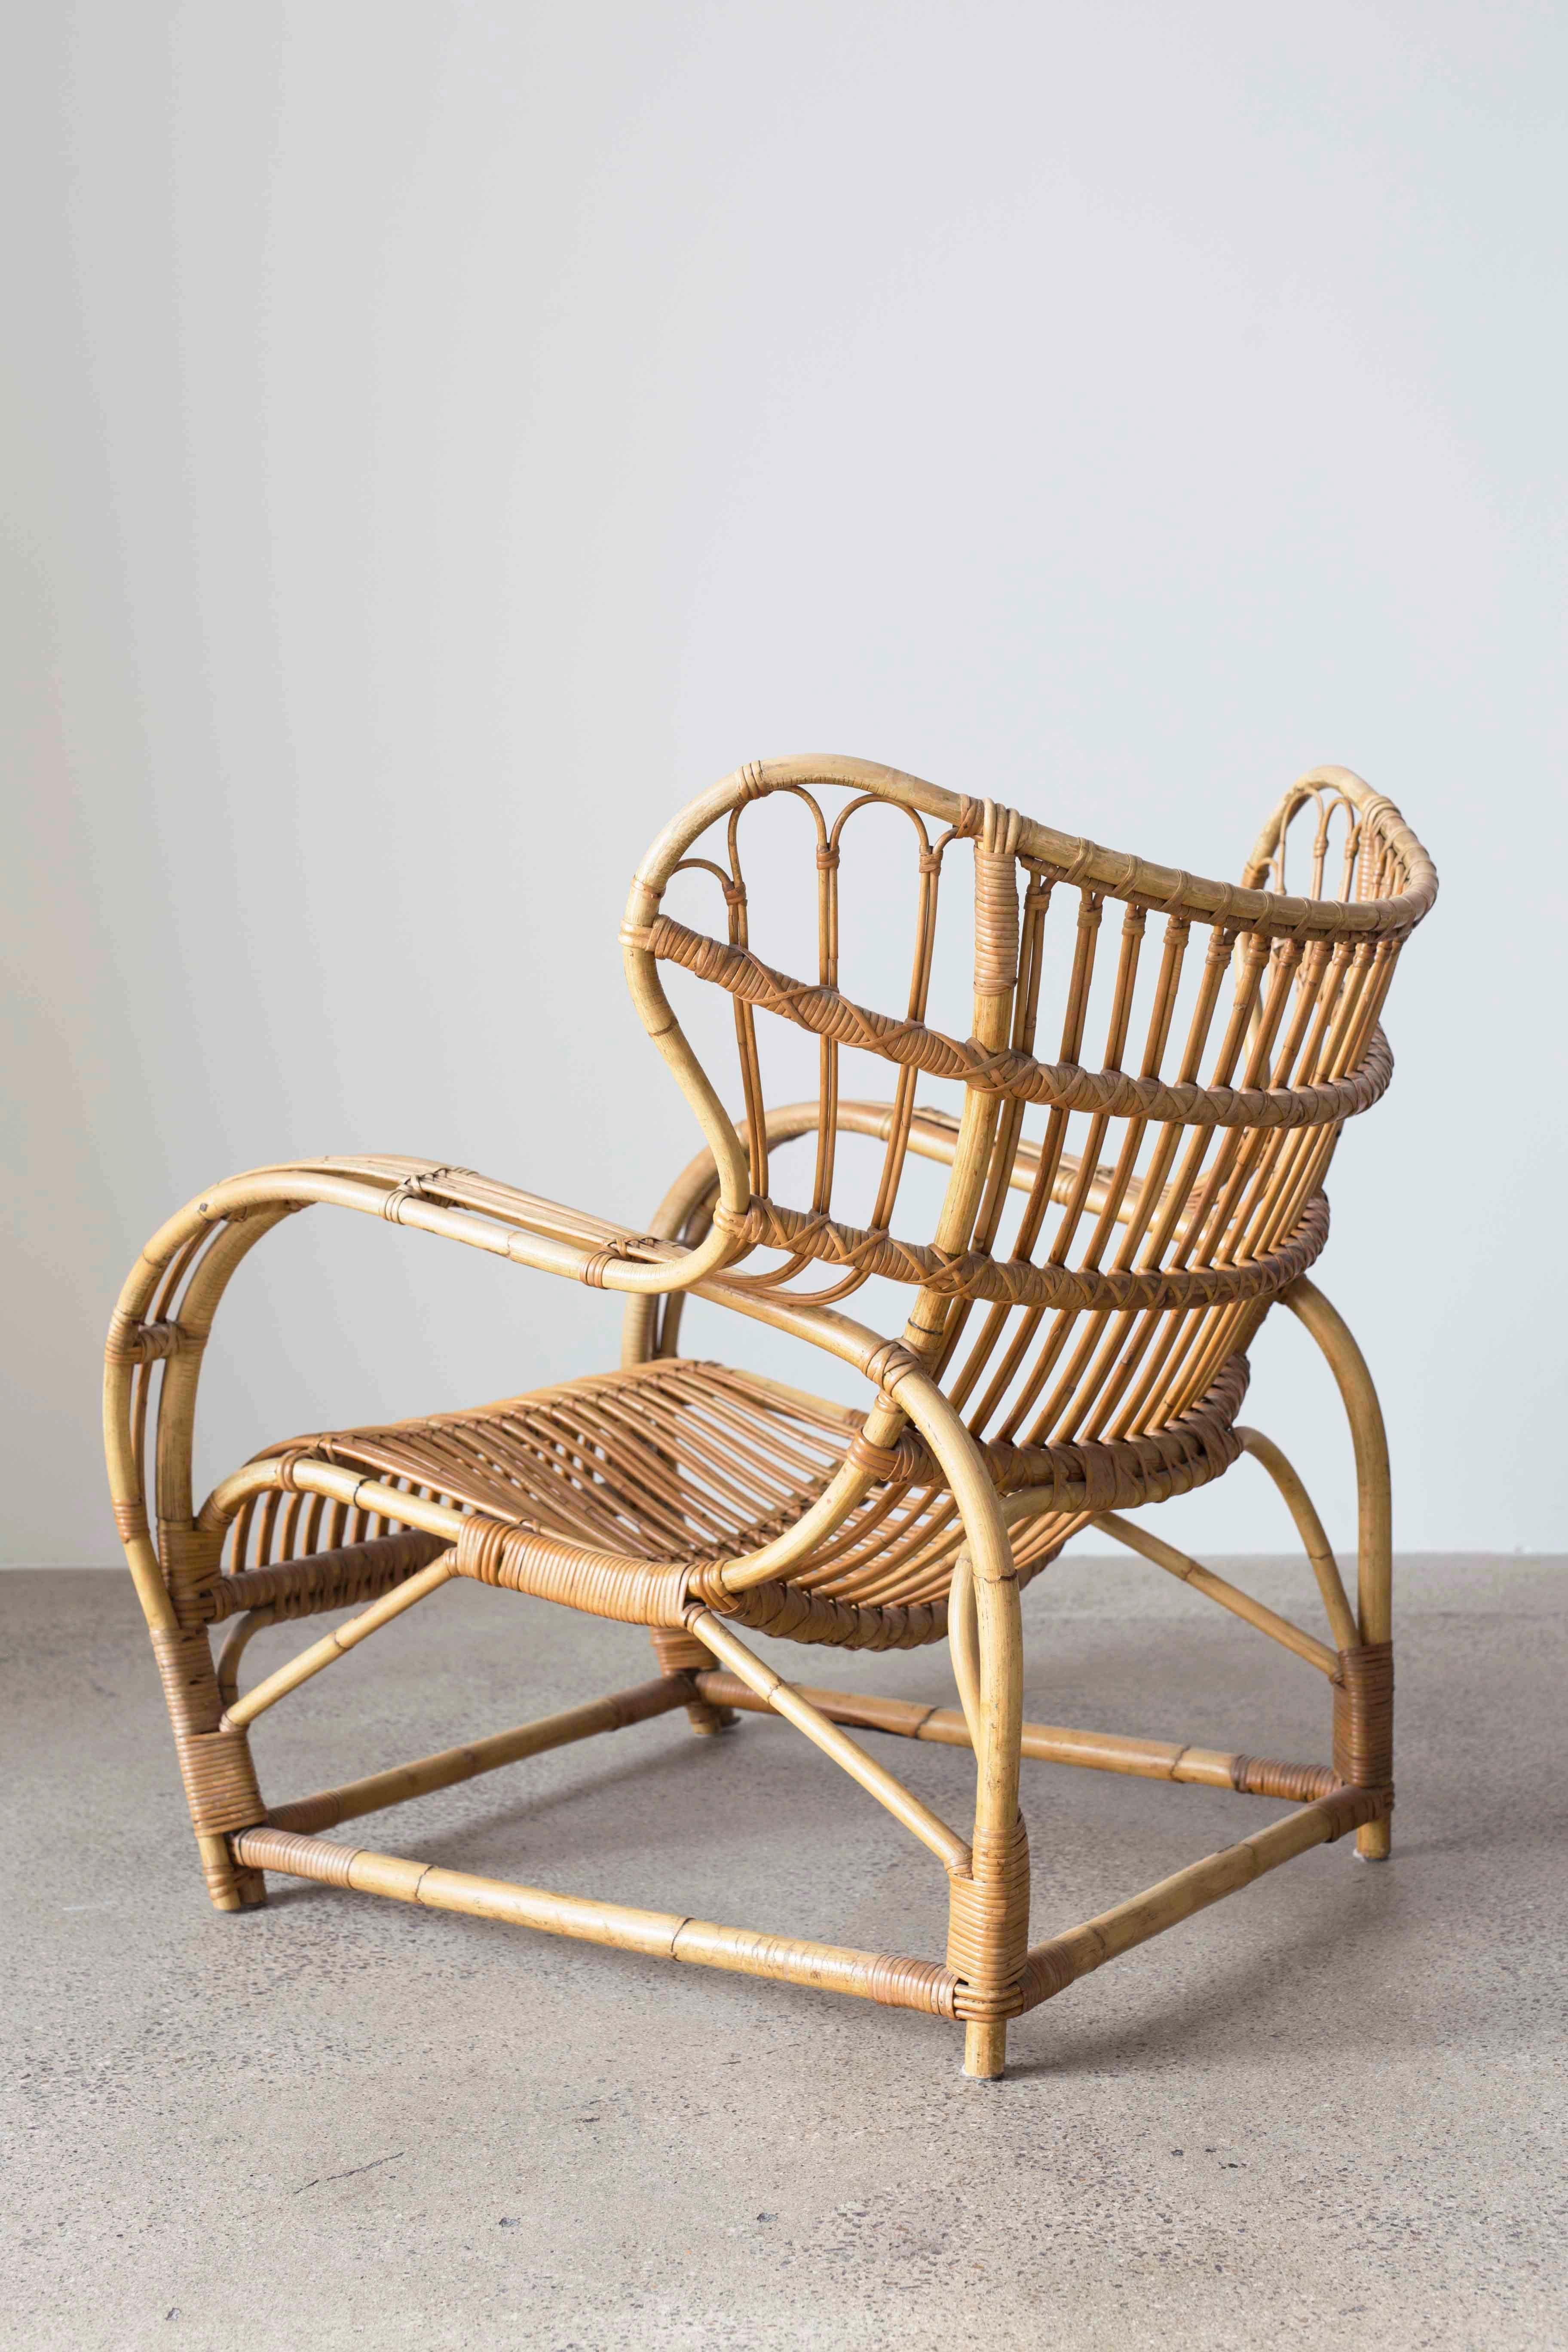 Rare fauteuil en rotin Viggo Boesen conçu en 1938 et fabriqué chez E.V.A. Nissen & Co. au Danemark.